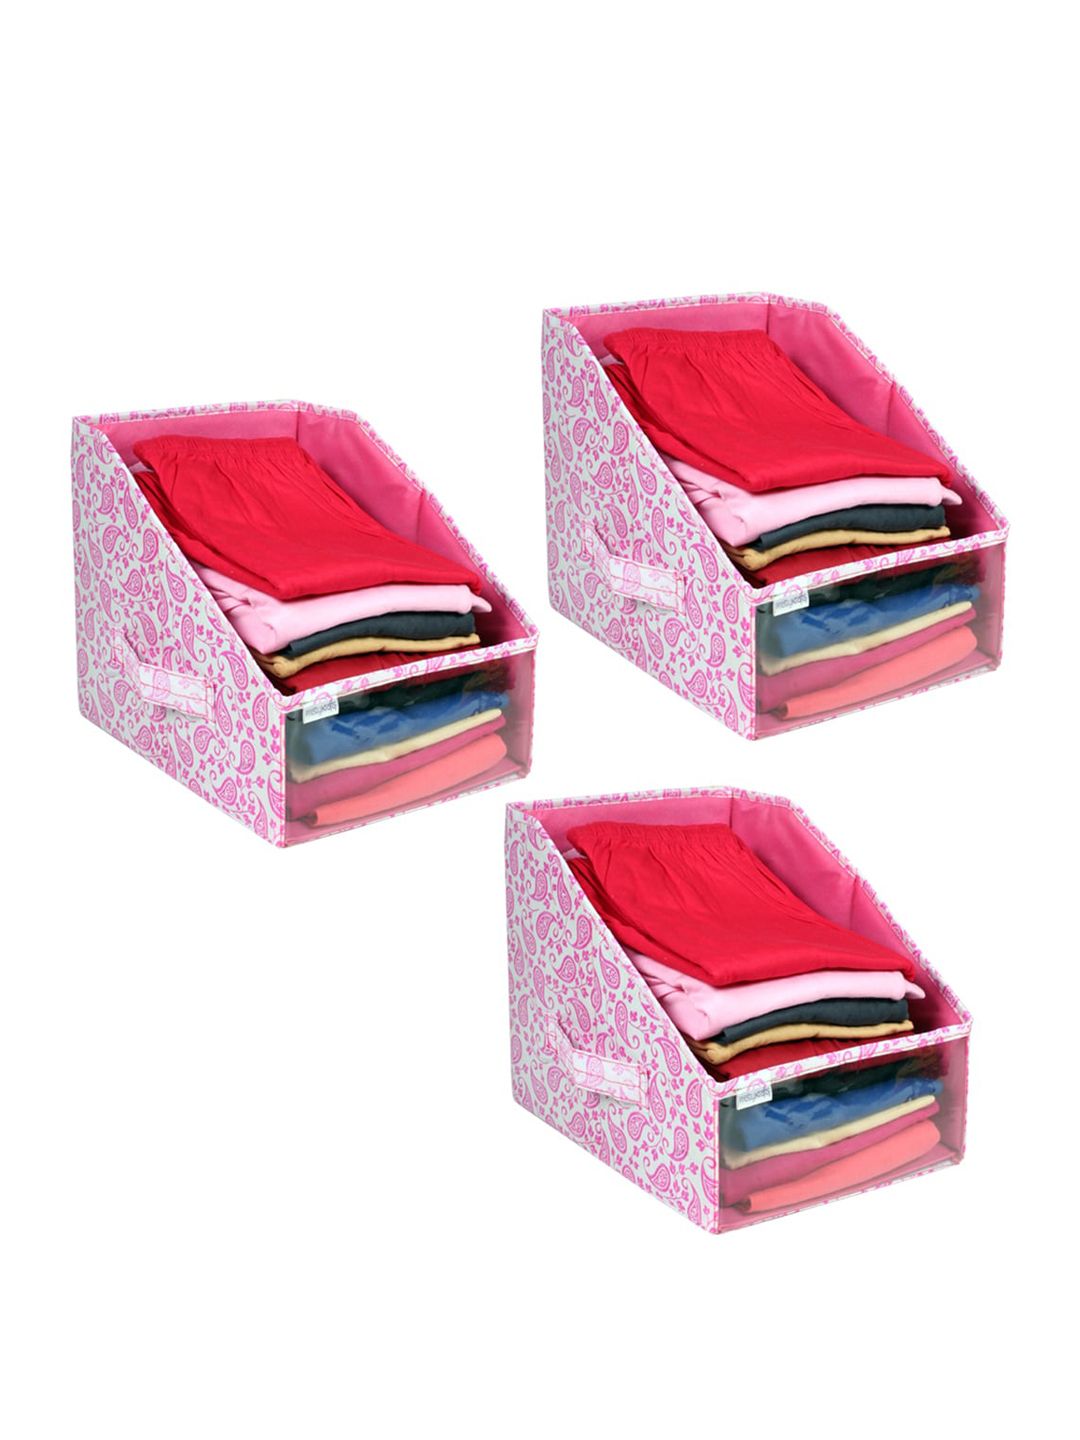 prettykrafts Set Of 3 Pink & White Printed Leggings stacker Closet Organiser Price in India